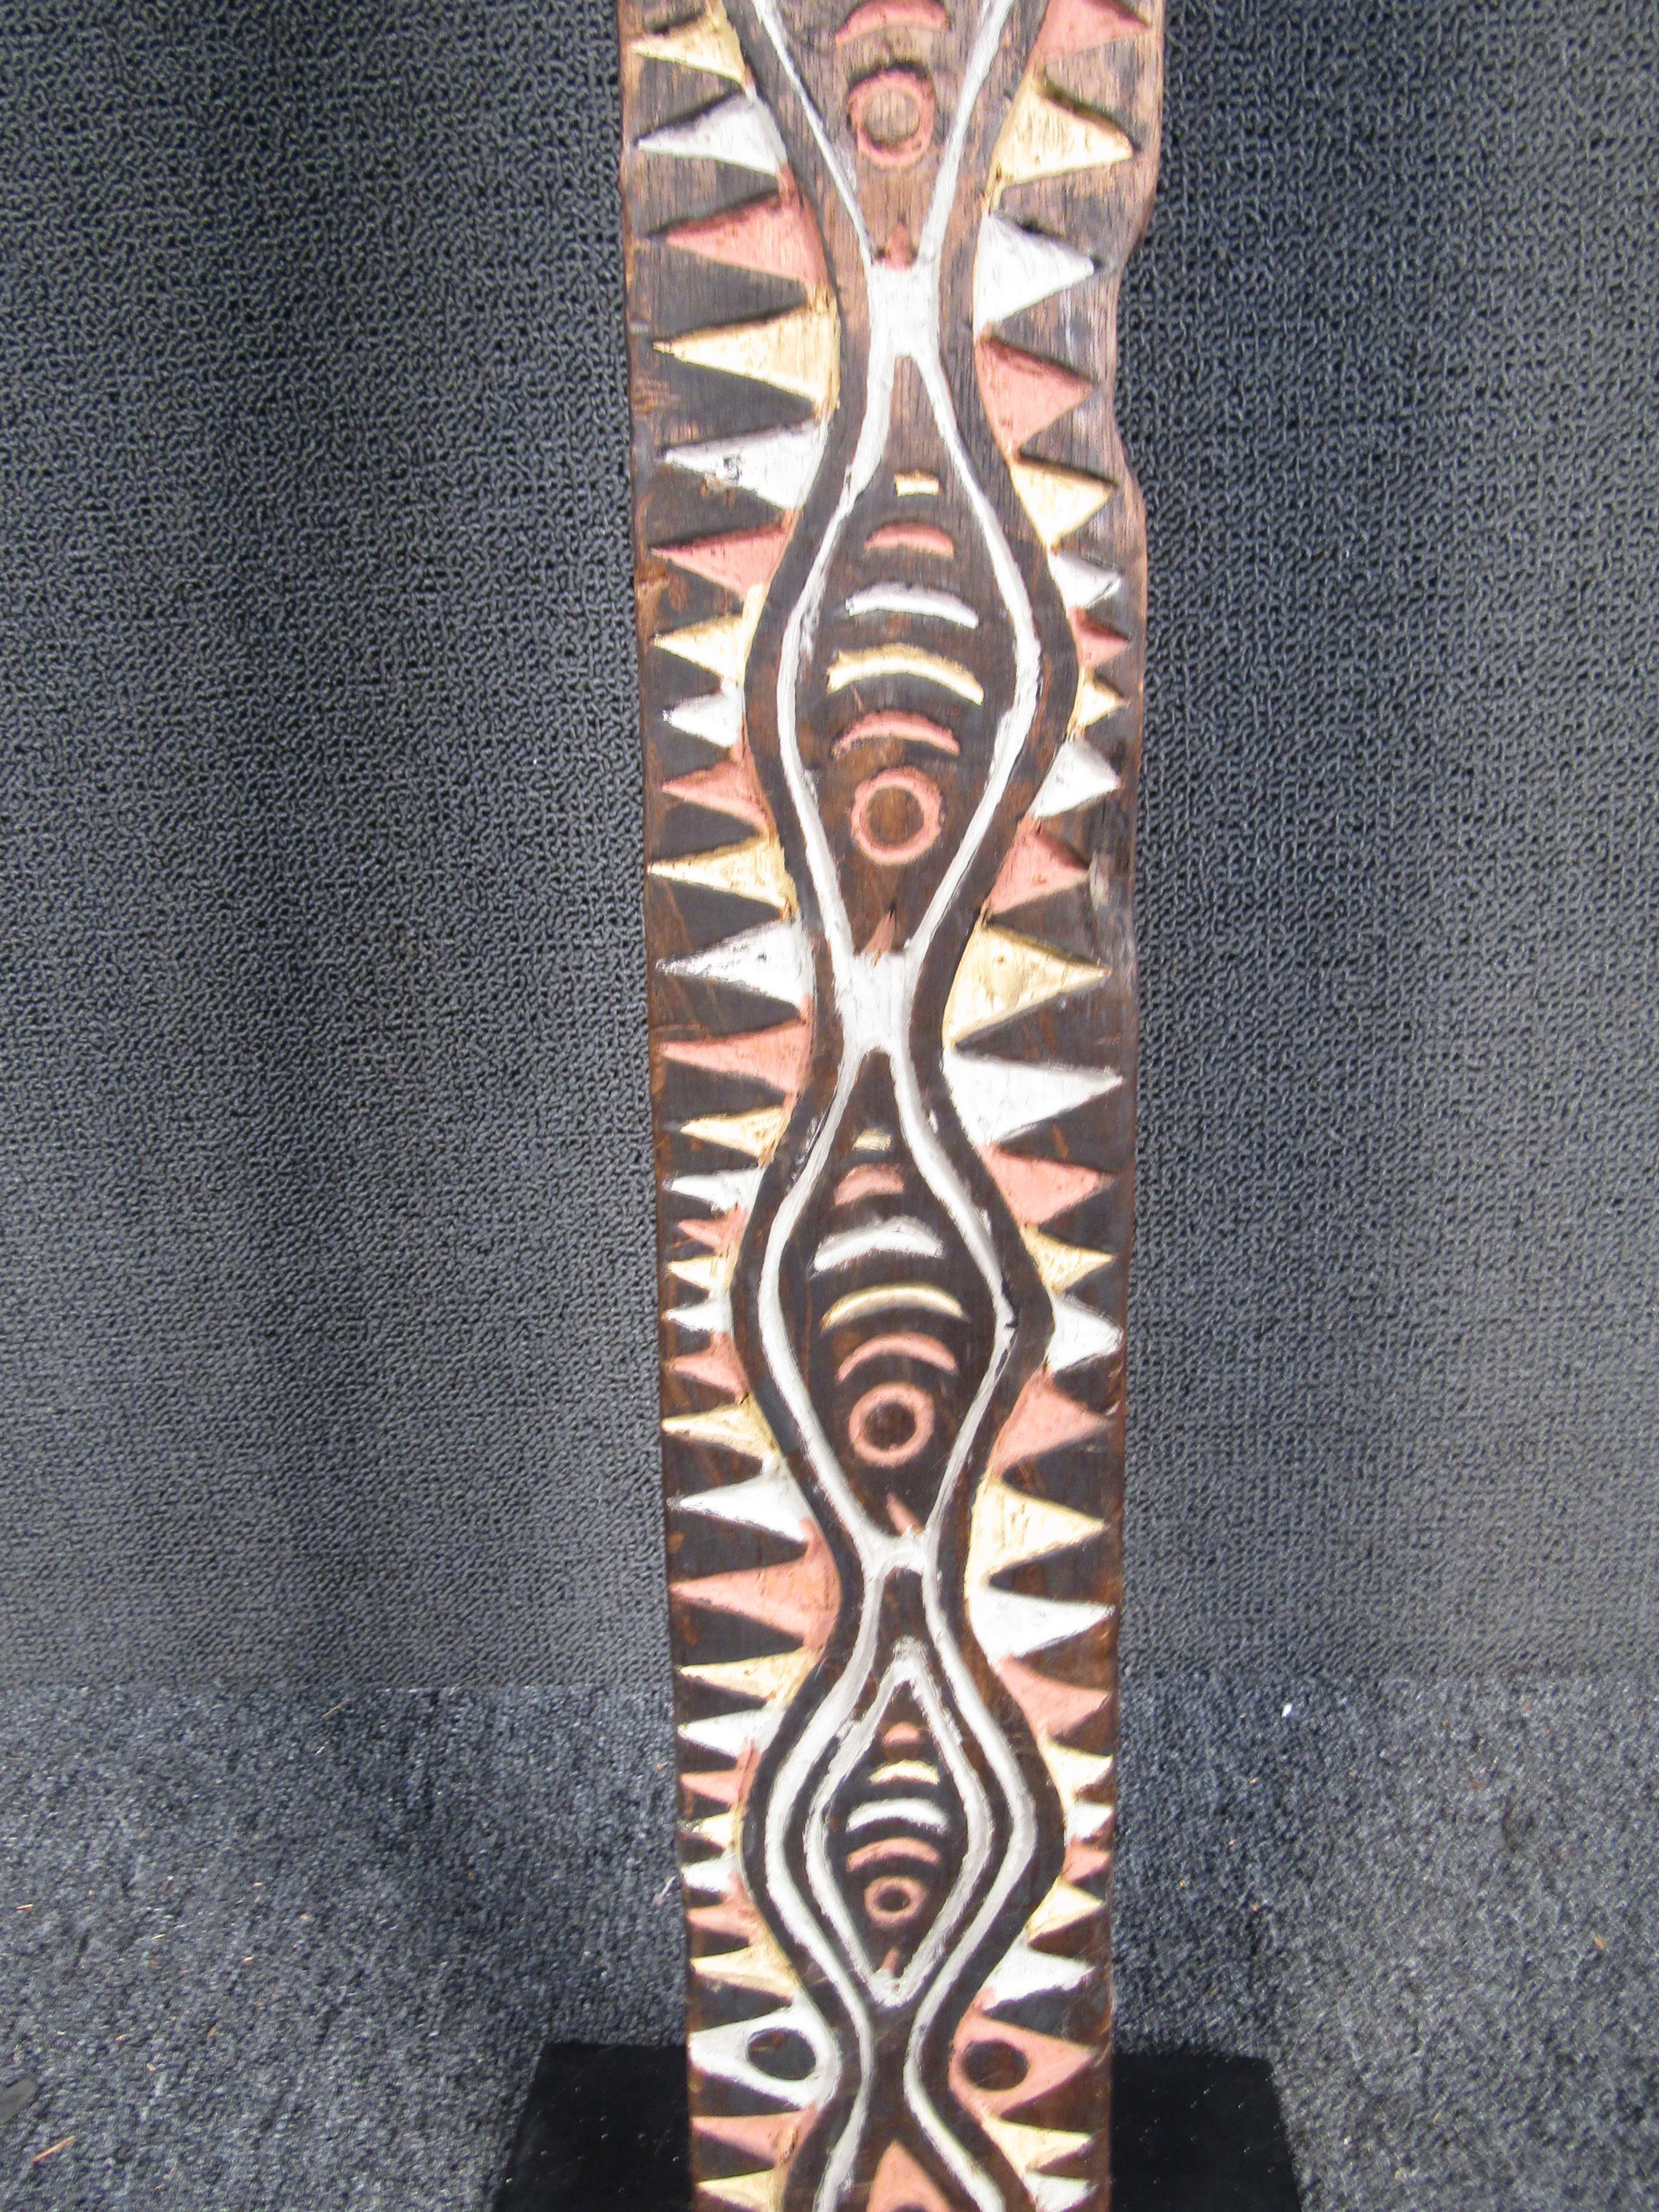 Woodwork Tribal Plank Art For Sale